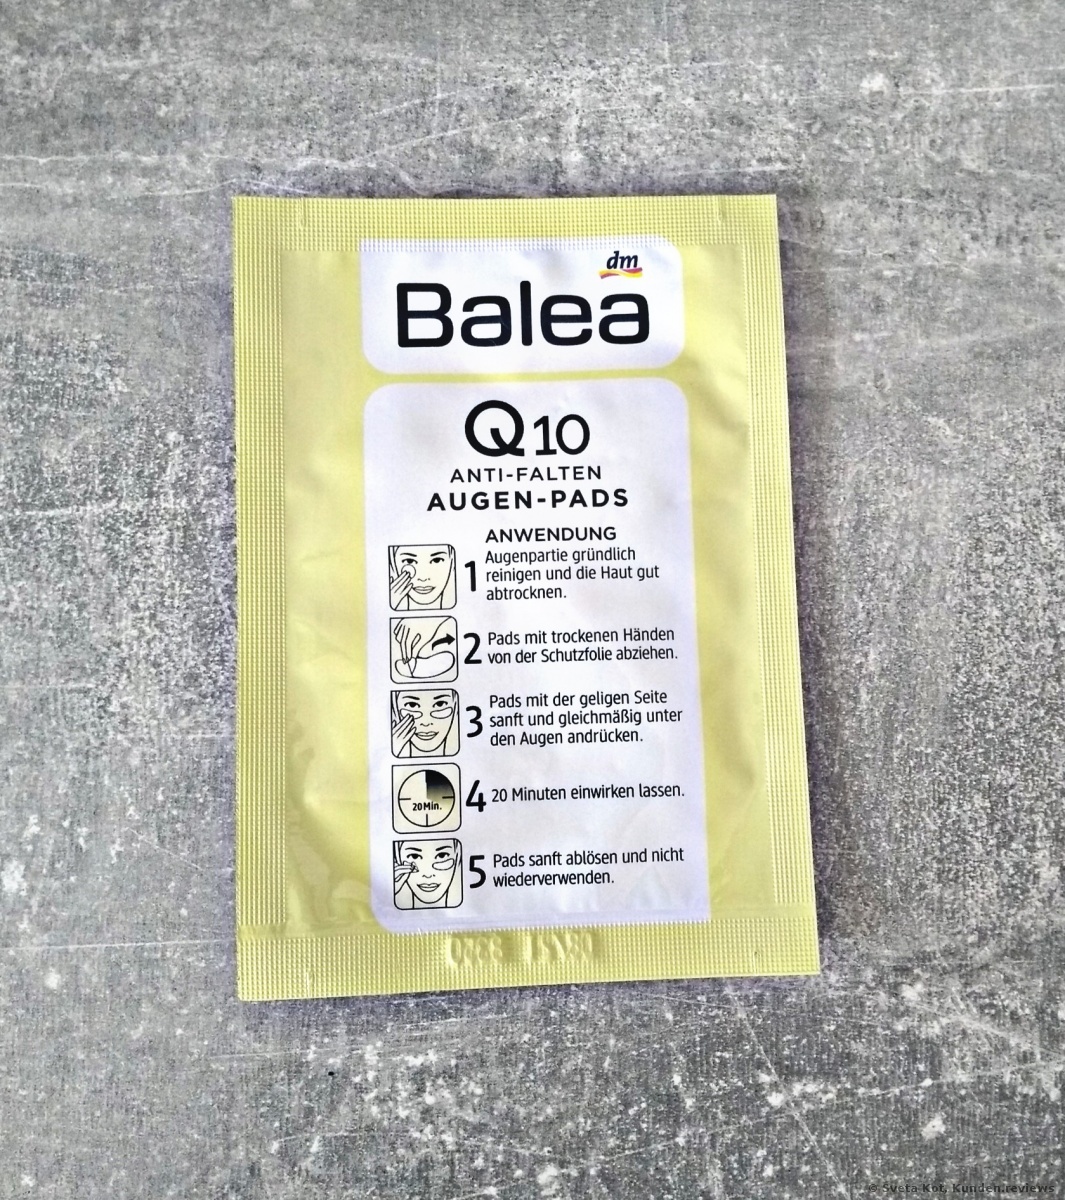  Balea Q10 Anti-Falten Augen-Pads 